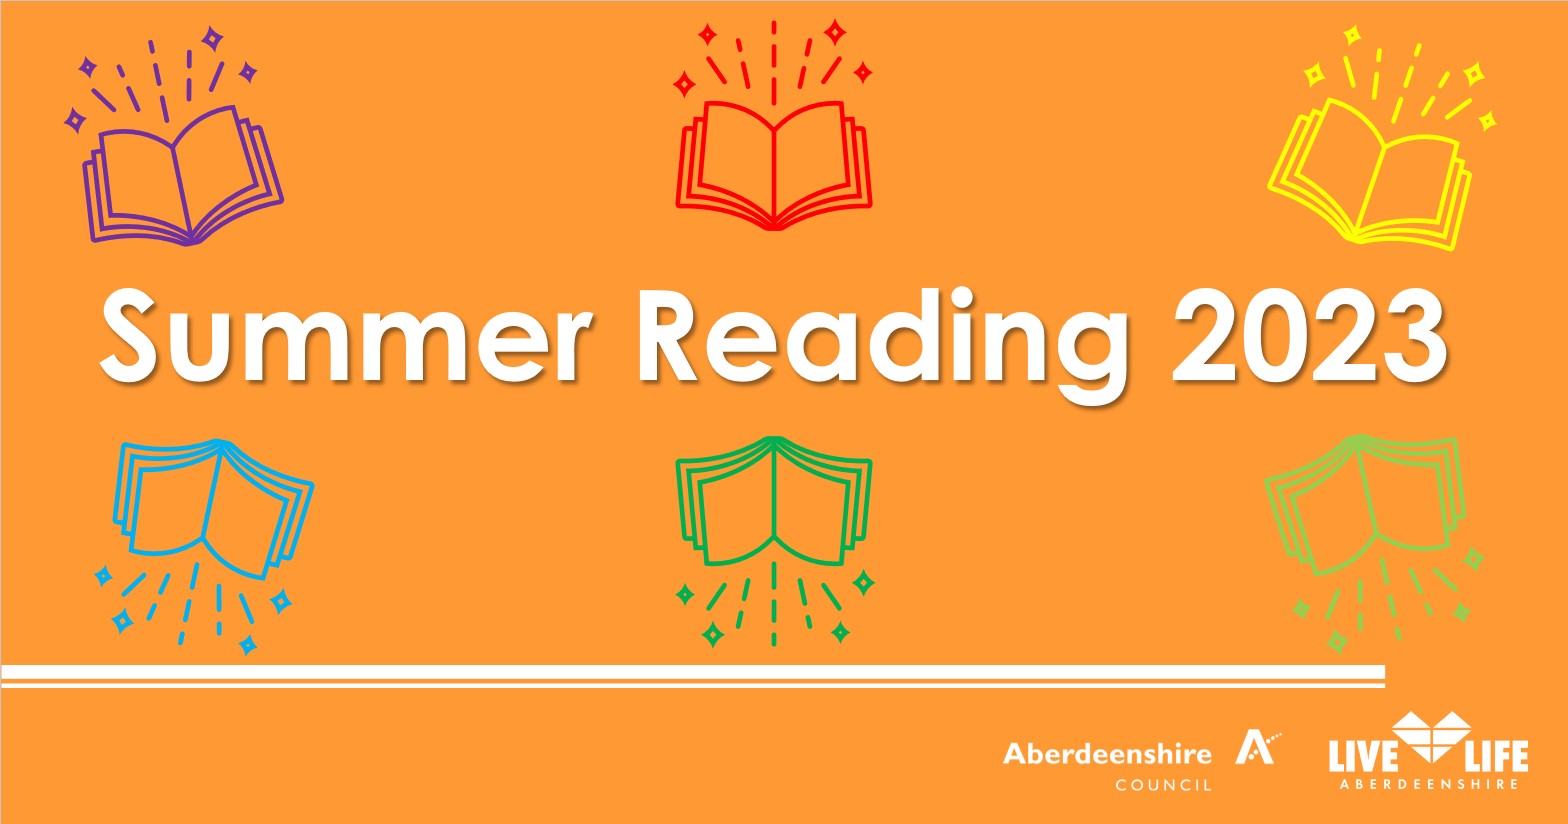 Summer Reading 2023 Live, Life Aberdeenshire